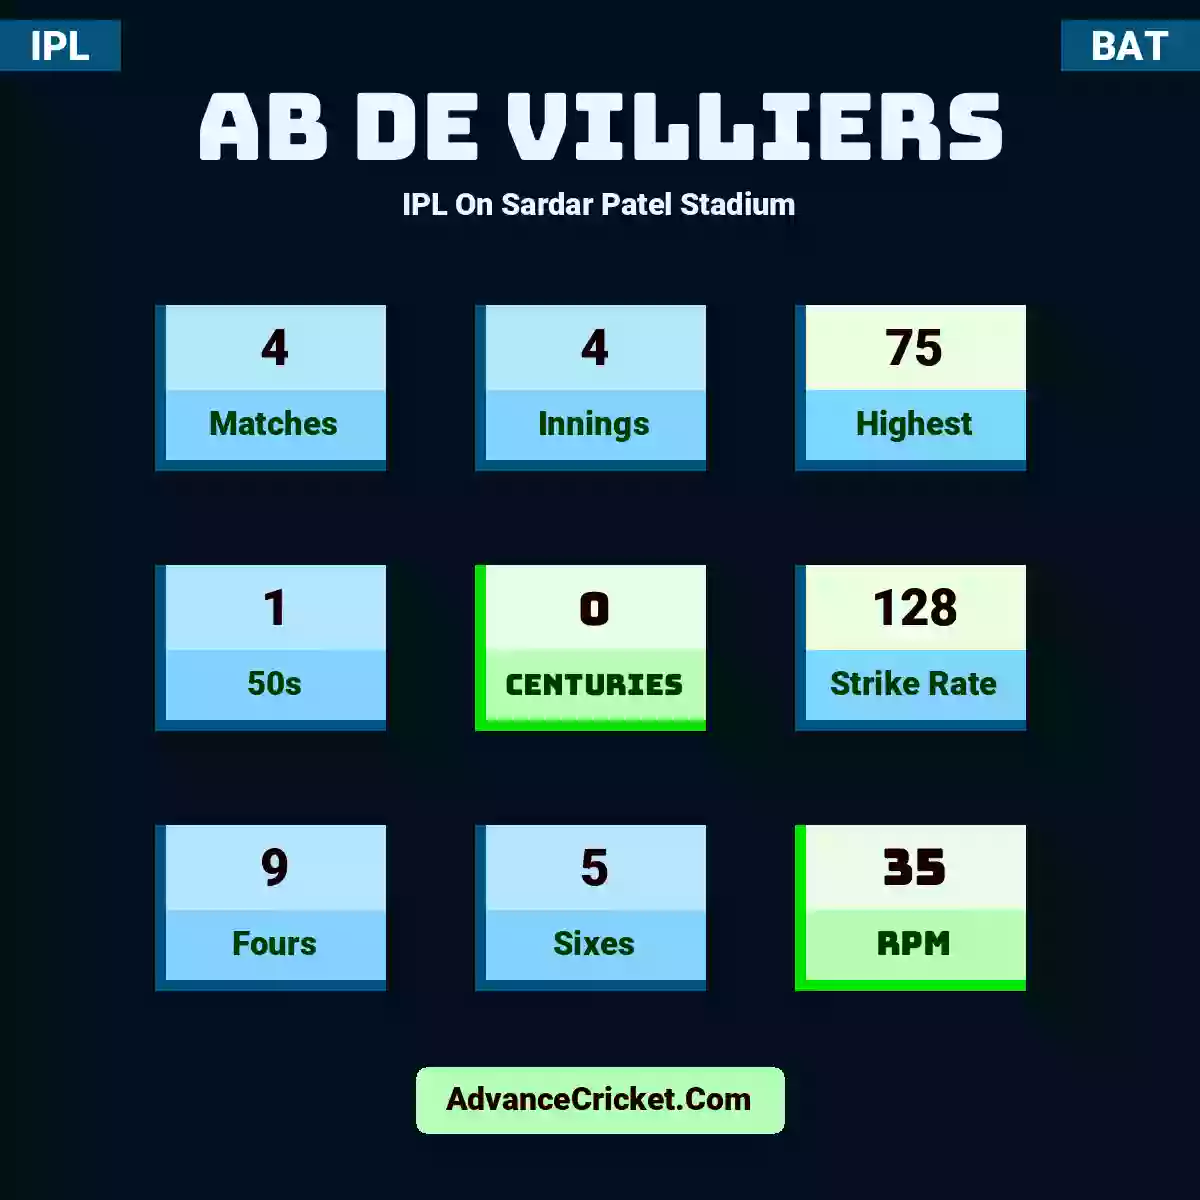 AB de Villiers IPL  On Sardar Patel Stadium, AB de Villiers played 4 matches, scored 75 runs as highest, 1 half-centuries, and 0 centuries, with a strike rate of 128. A.Villiers hit 9 fours and 5 sixes, with an RPM of 35.